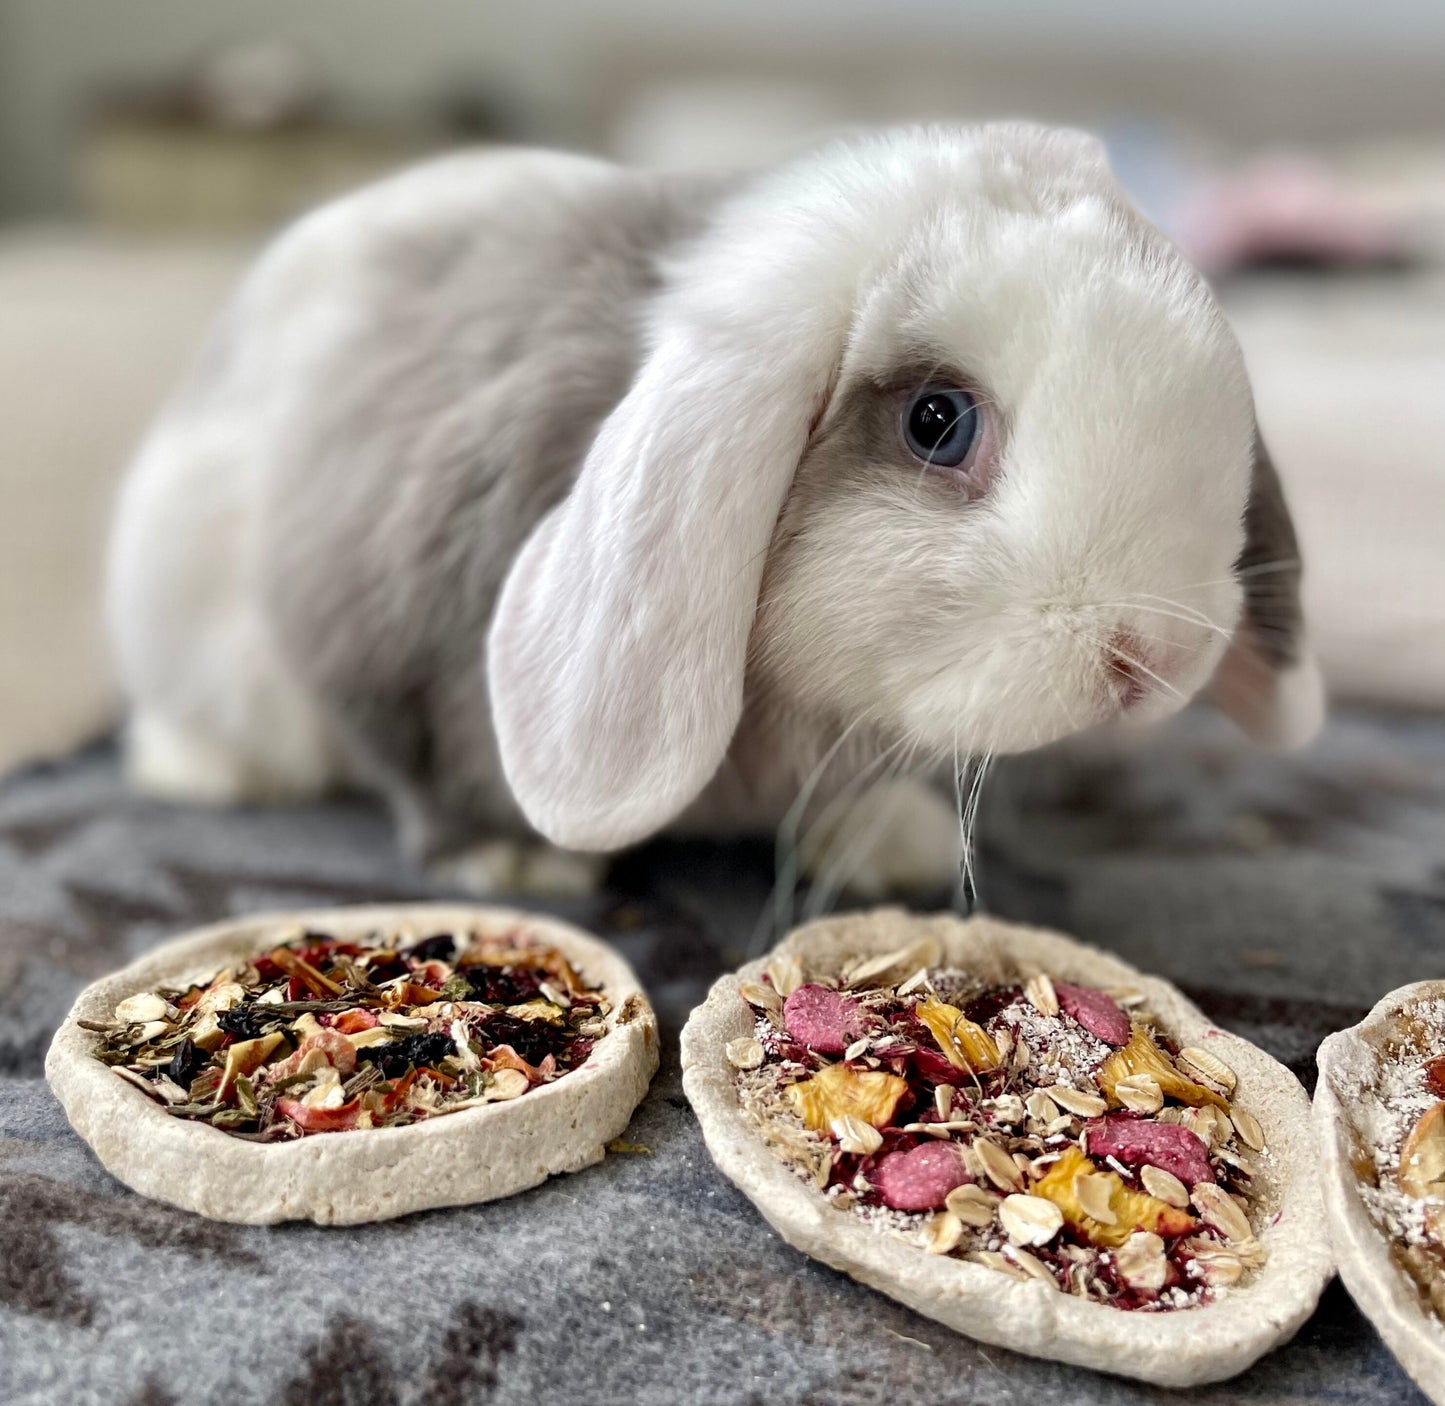 Little Hopper’s Pizza~ cute bunny treats~ small animal treats~ chinchilla, guinea pig, hamster treats, organic, healthy, natural~enrichment